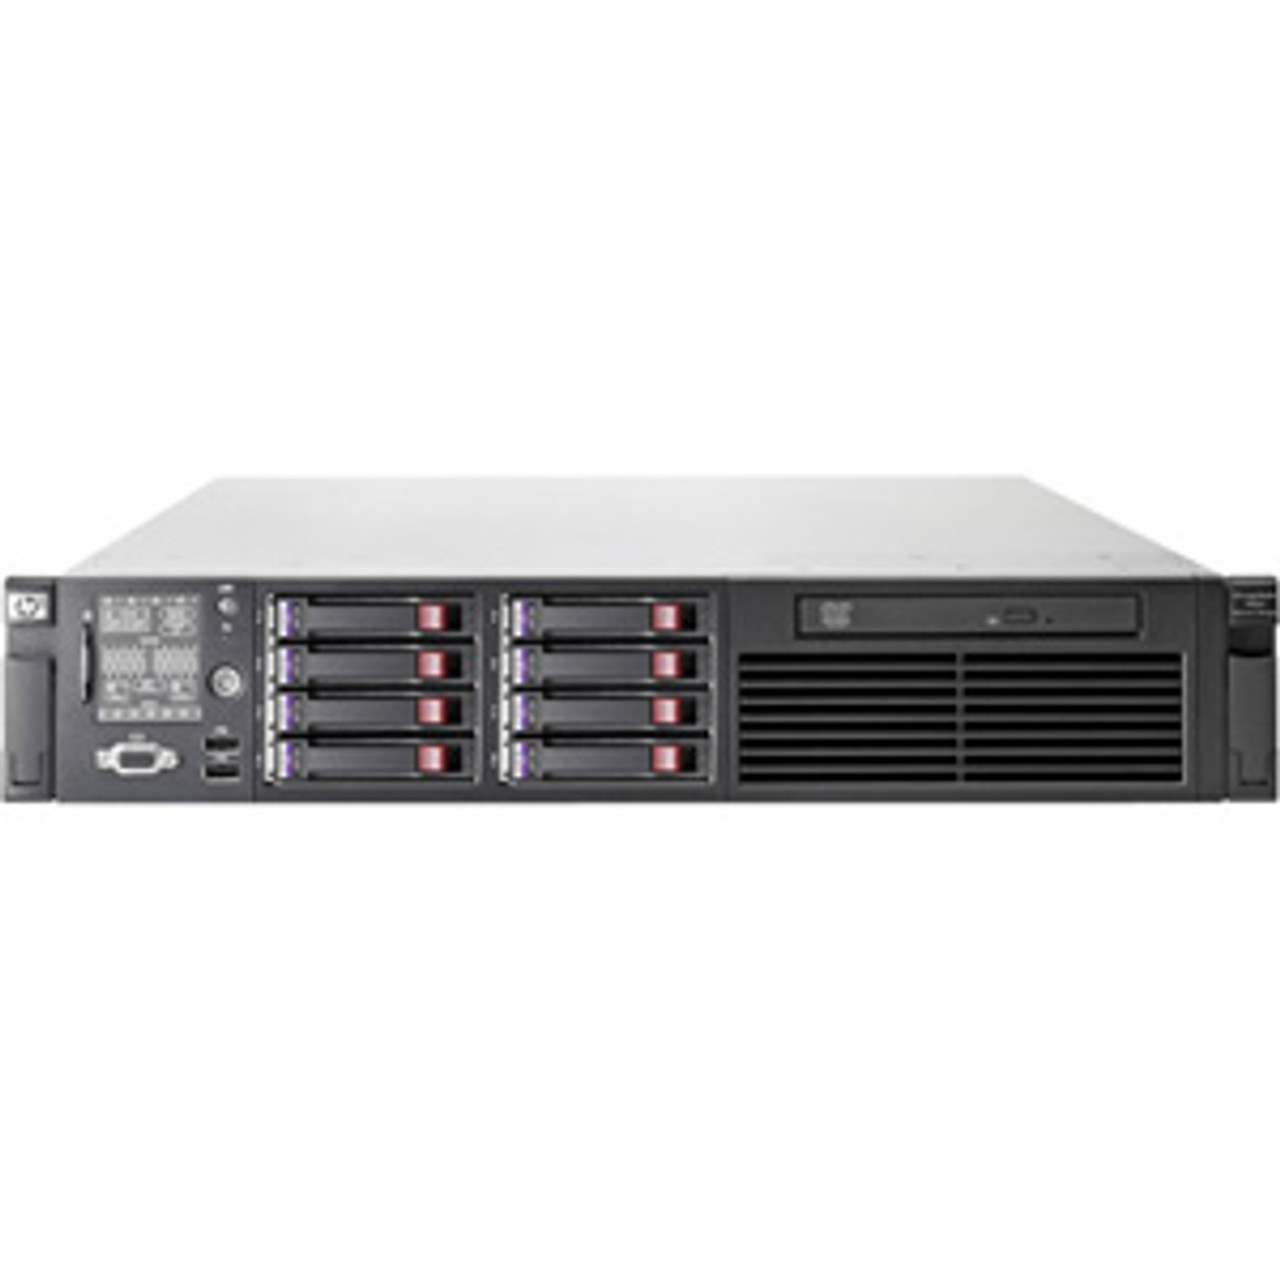 BK779SB - HP StorageWorks X1800 Network Storage Server 1 x Intel Xeon E5530 2.40 GHz 2.40 TB (8 x 300 GB) USB RJ-45 Network HD-15 VGA Mouse Keyboard Serial